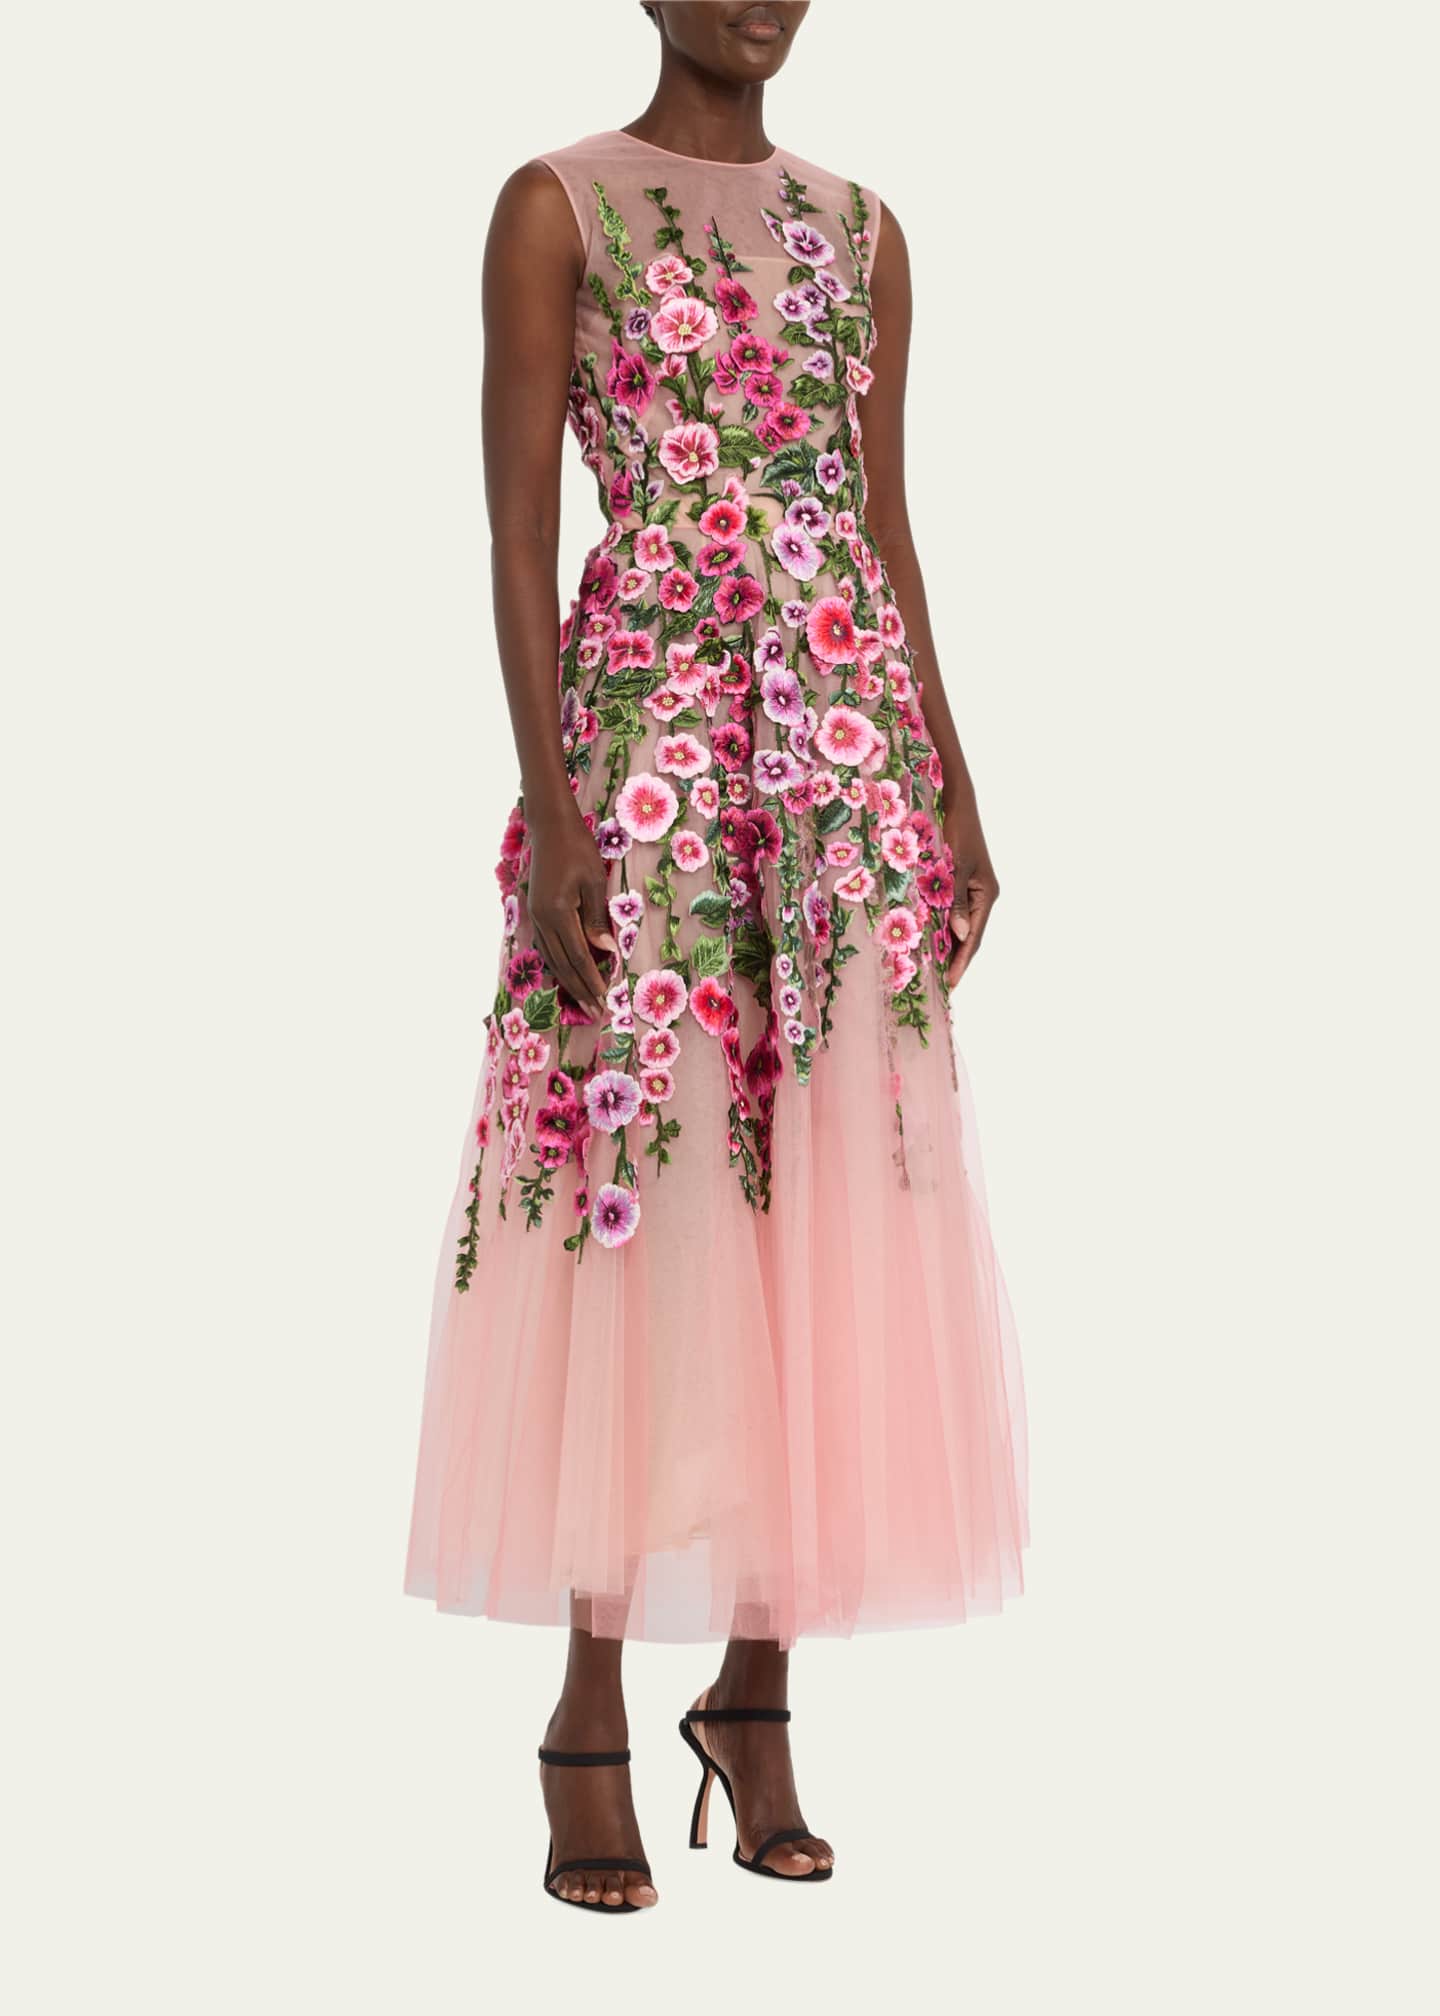 Oscar de la Renta Floral-Embroidered Tulle Dress - Bergdorf Goodman